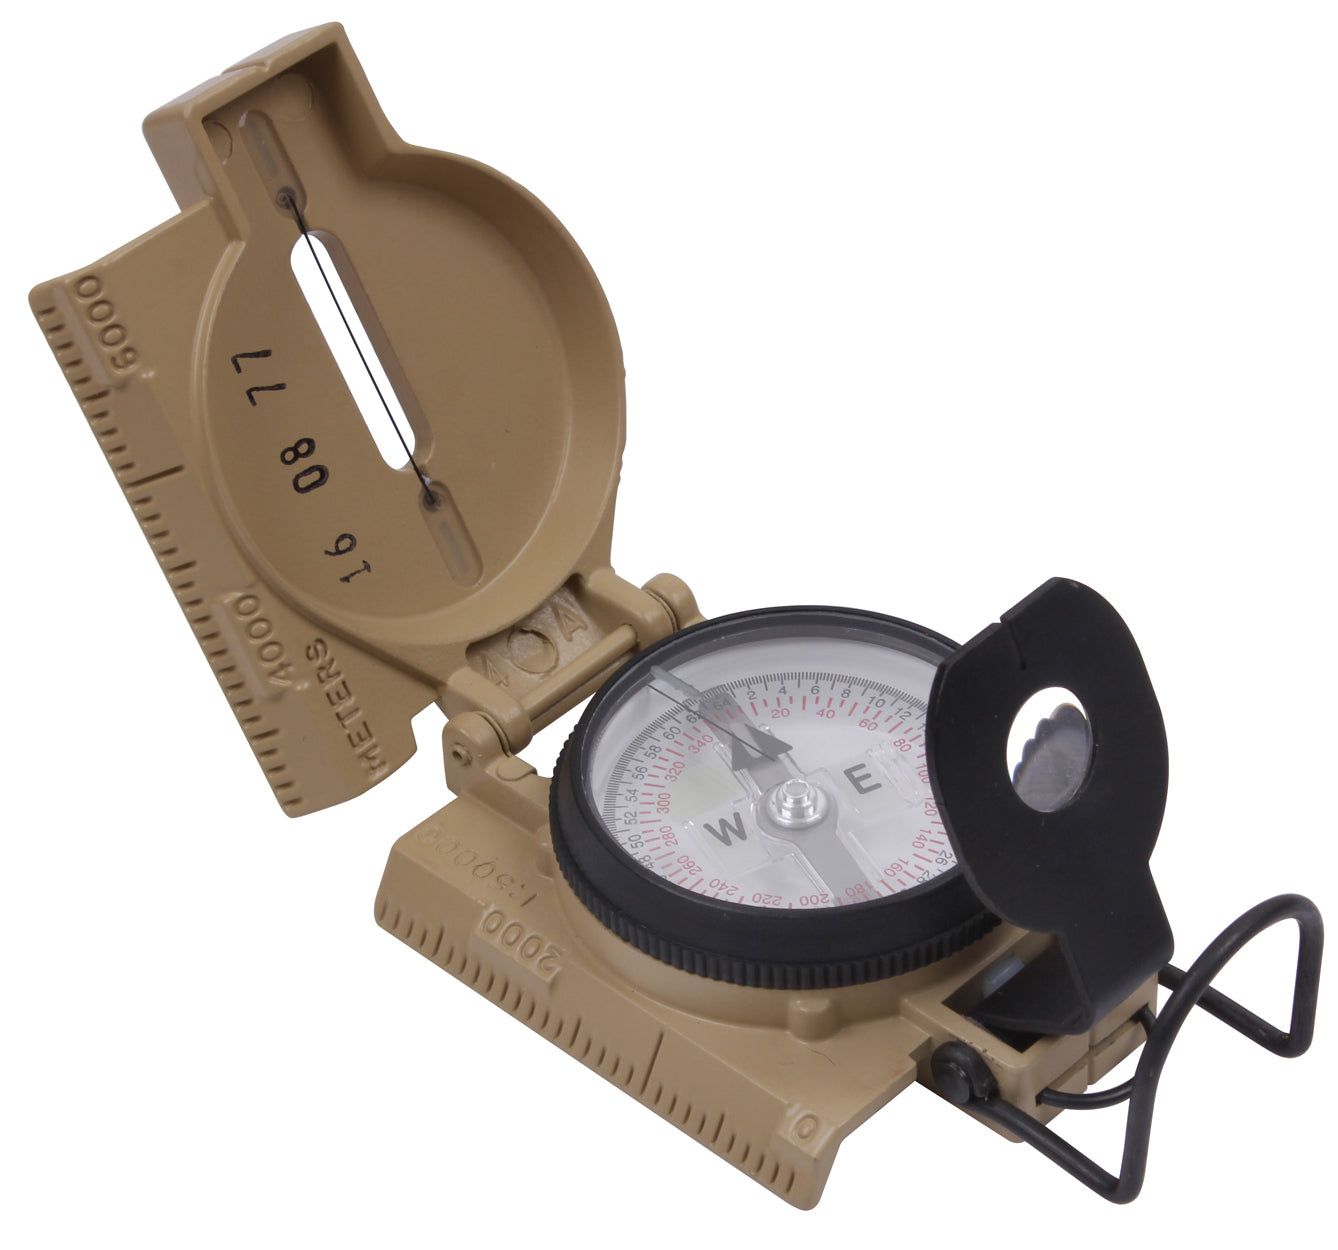 Cammenga G.I. Military Phosphorescent Lensatic Compass Compasses MilTac Tactical Military Outdoor Gear Australia